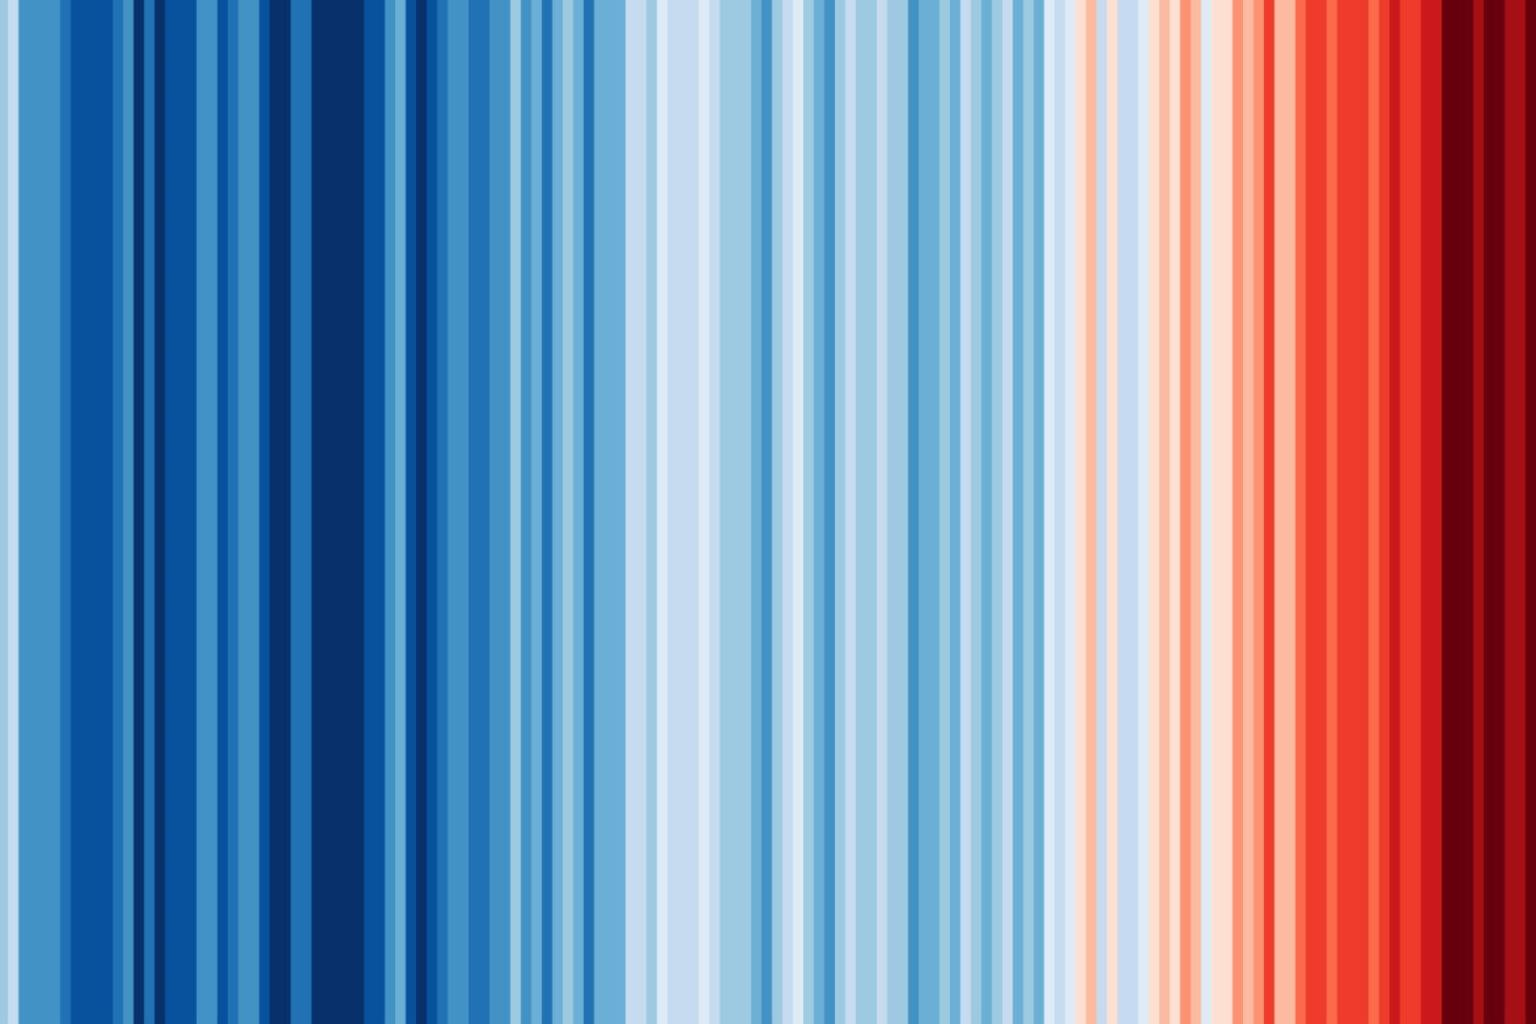 Warming Stripes, 1850-2023. Graphic: Ed Hawkins / University of Reading